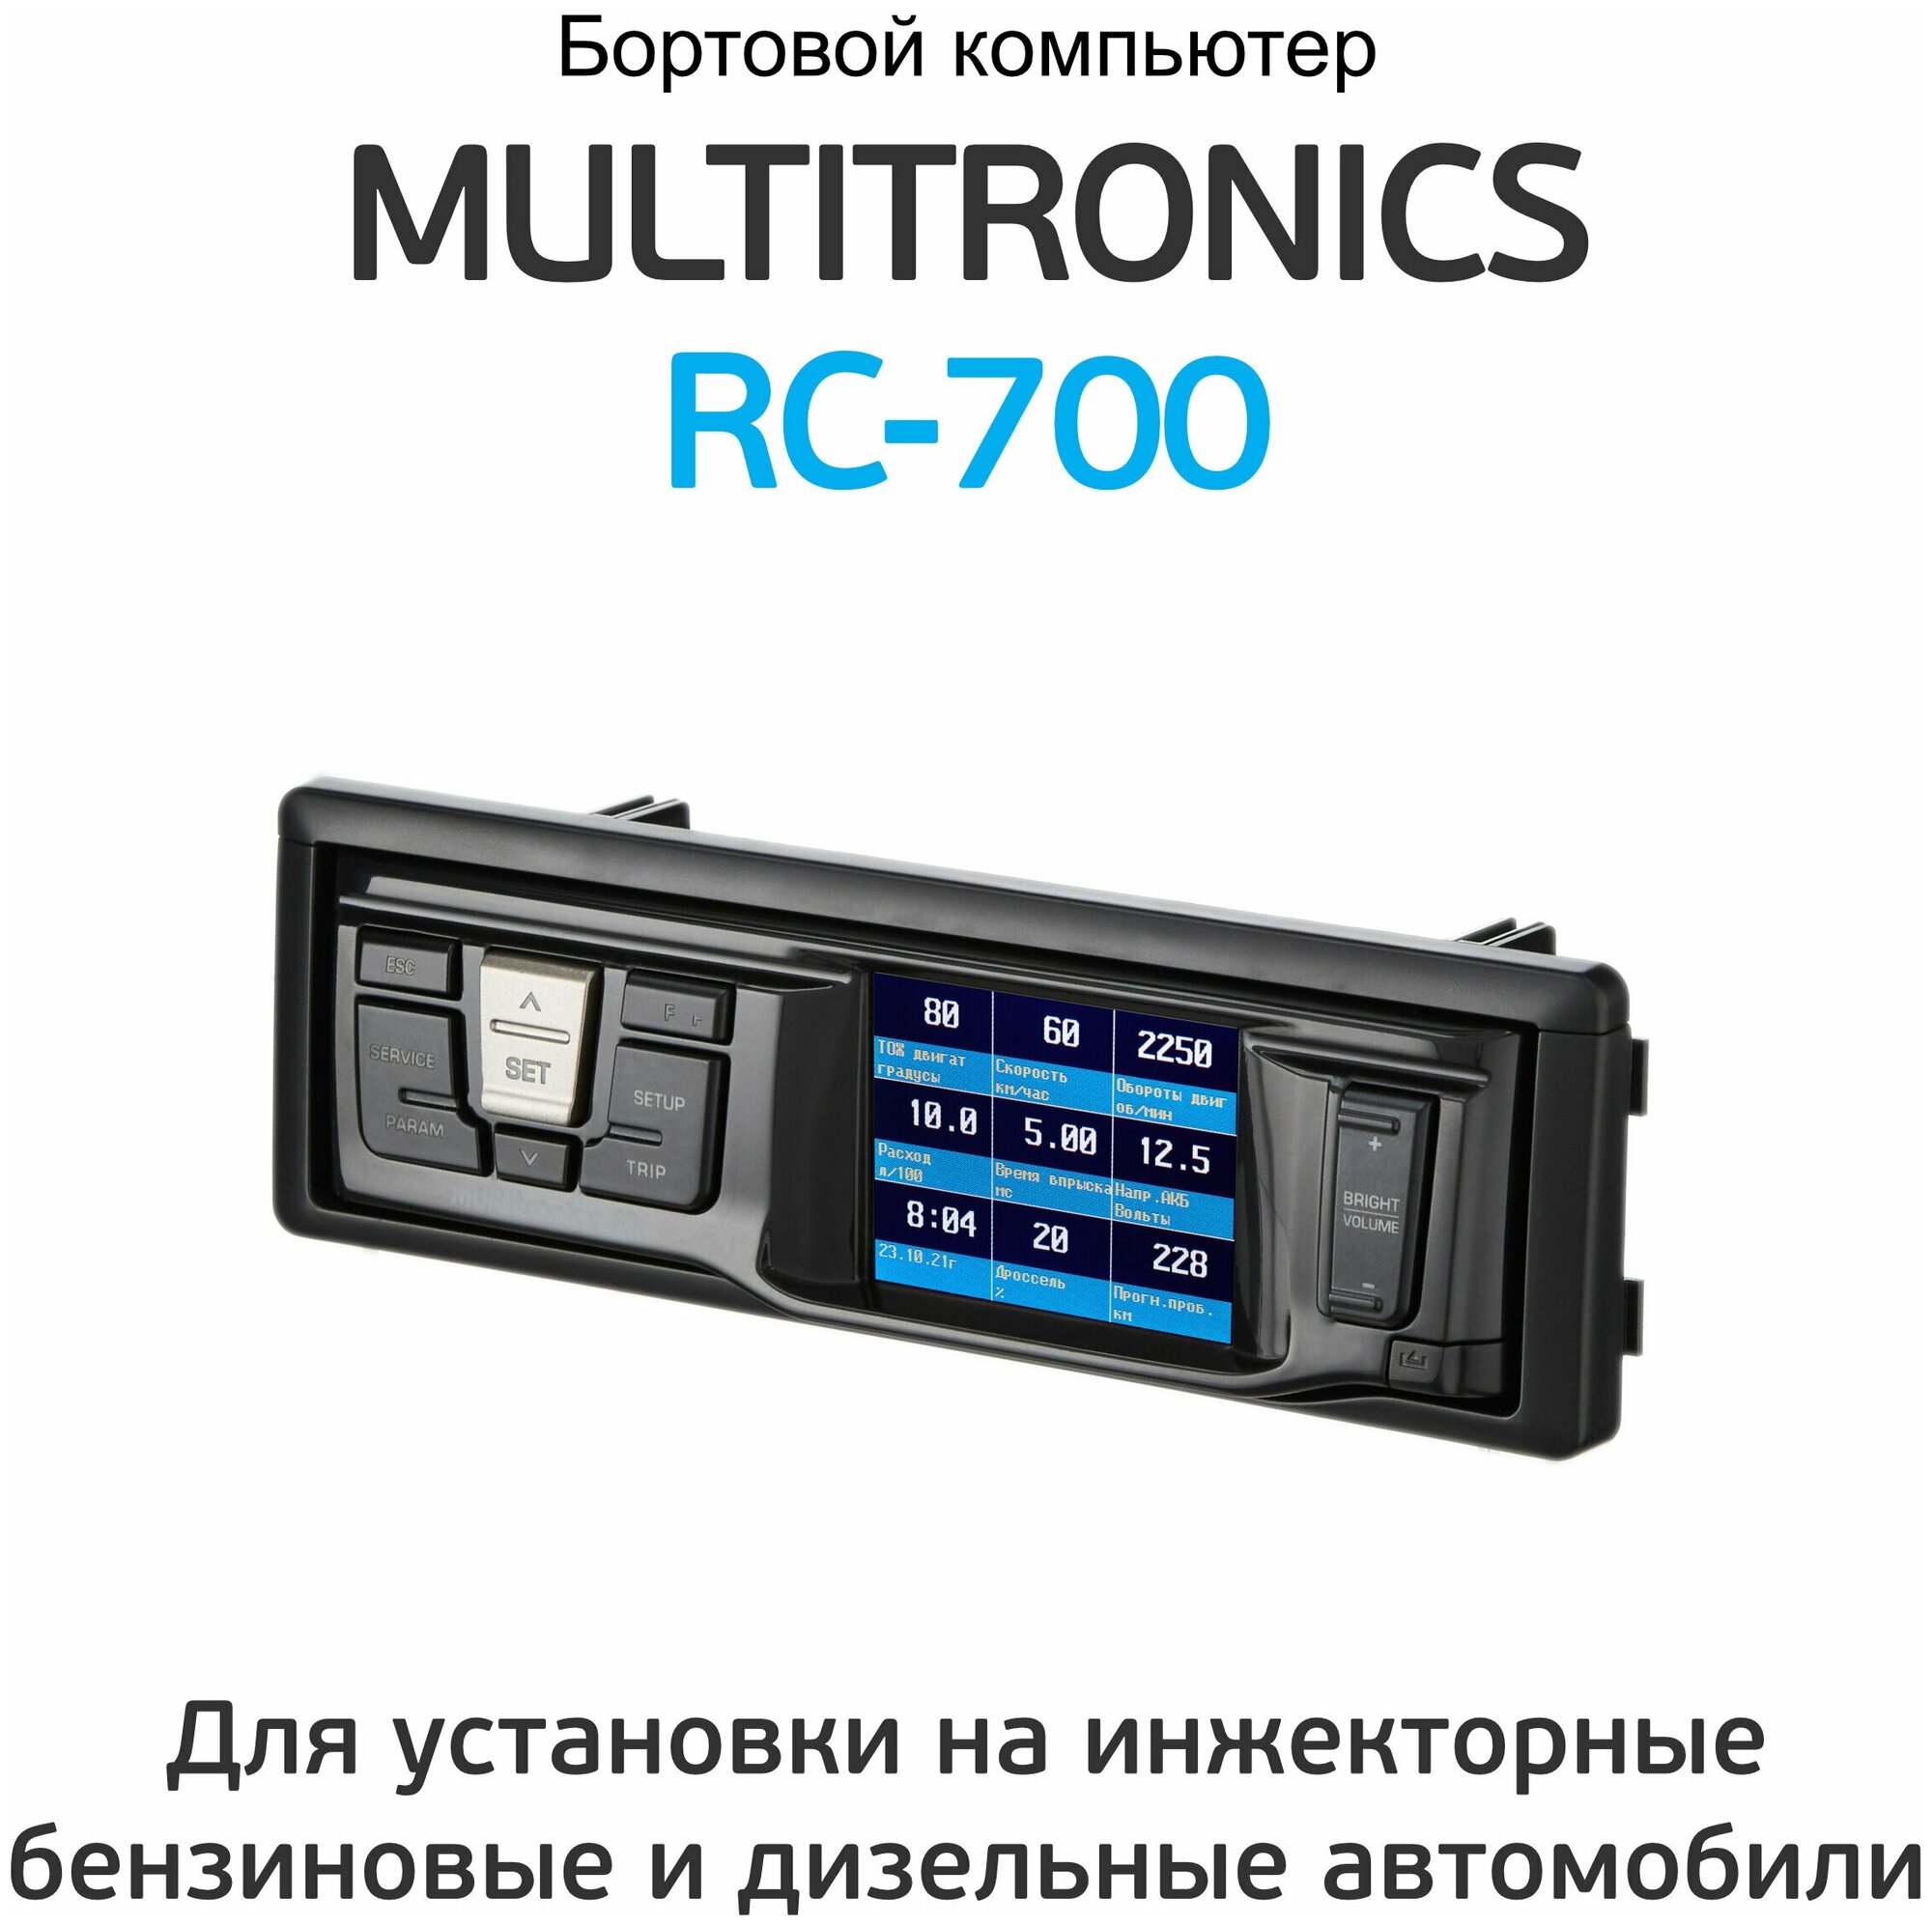 Маршрутный компьютер Multitronics RC-700